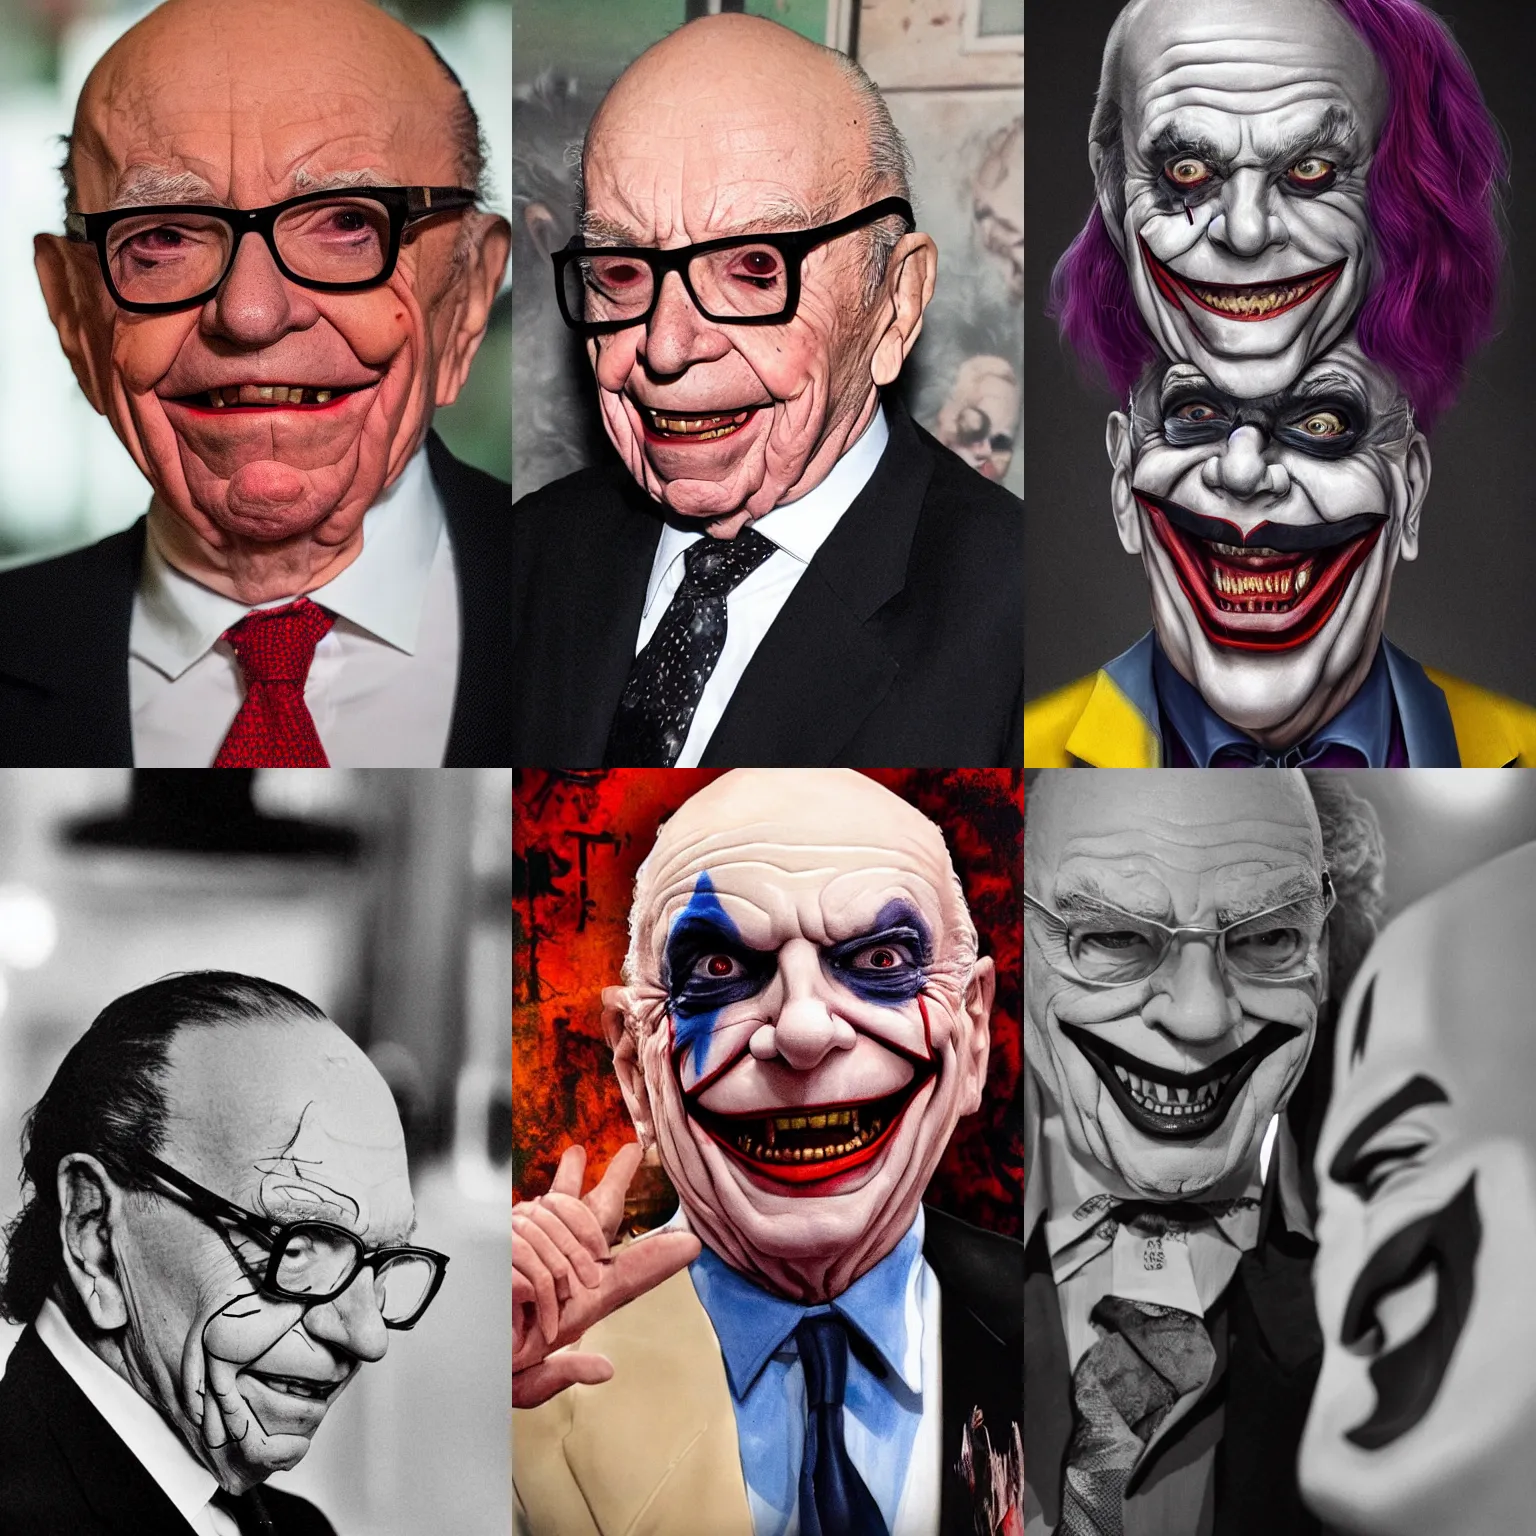 Prompt: Rupert Murdoch as the joker, hell in the background, portrait photograph